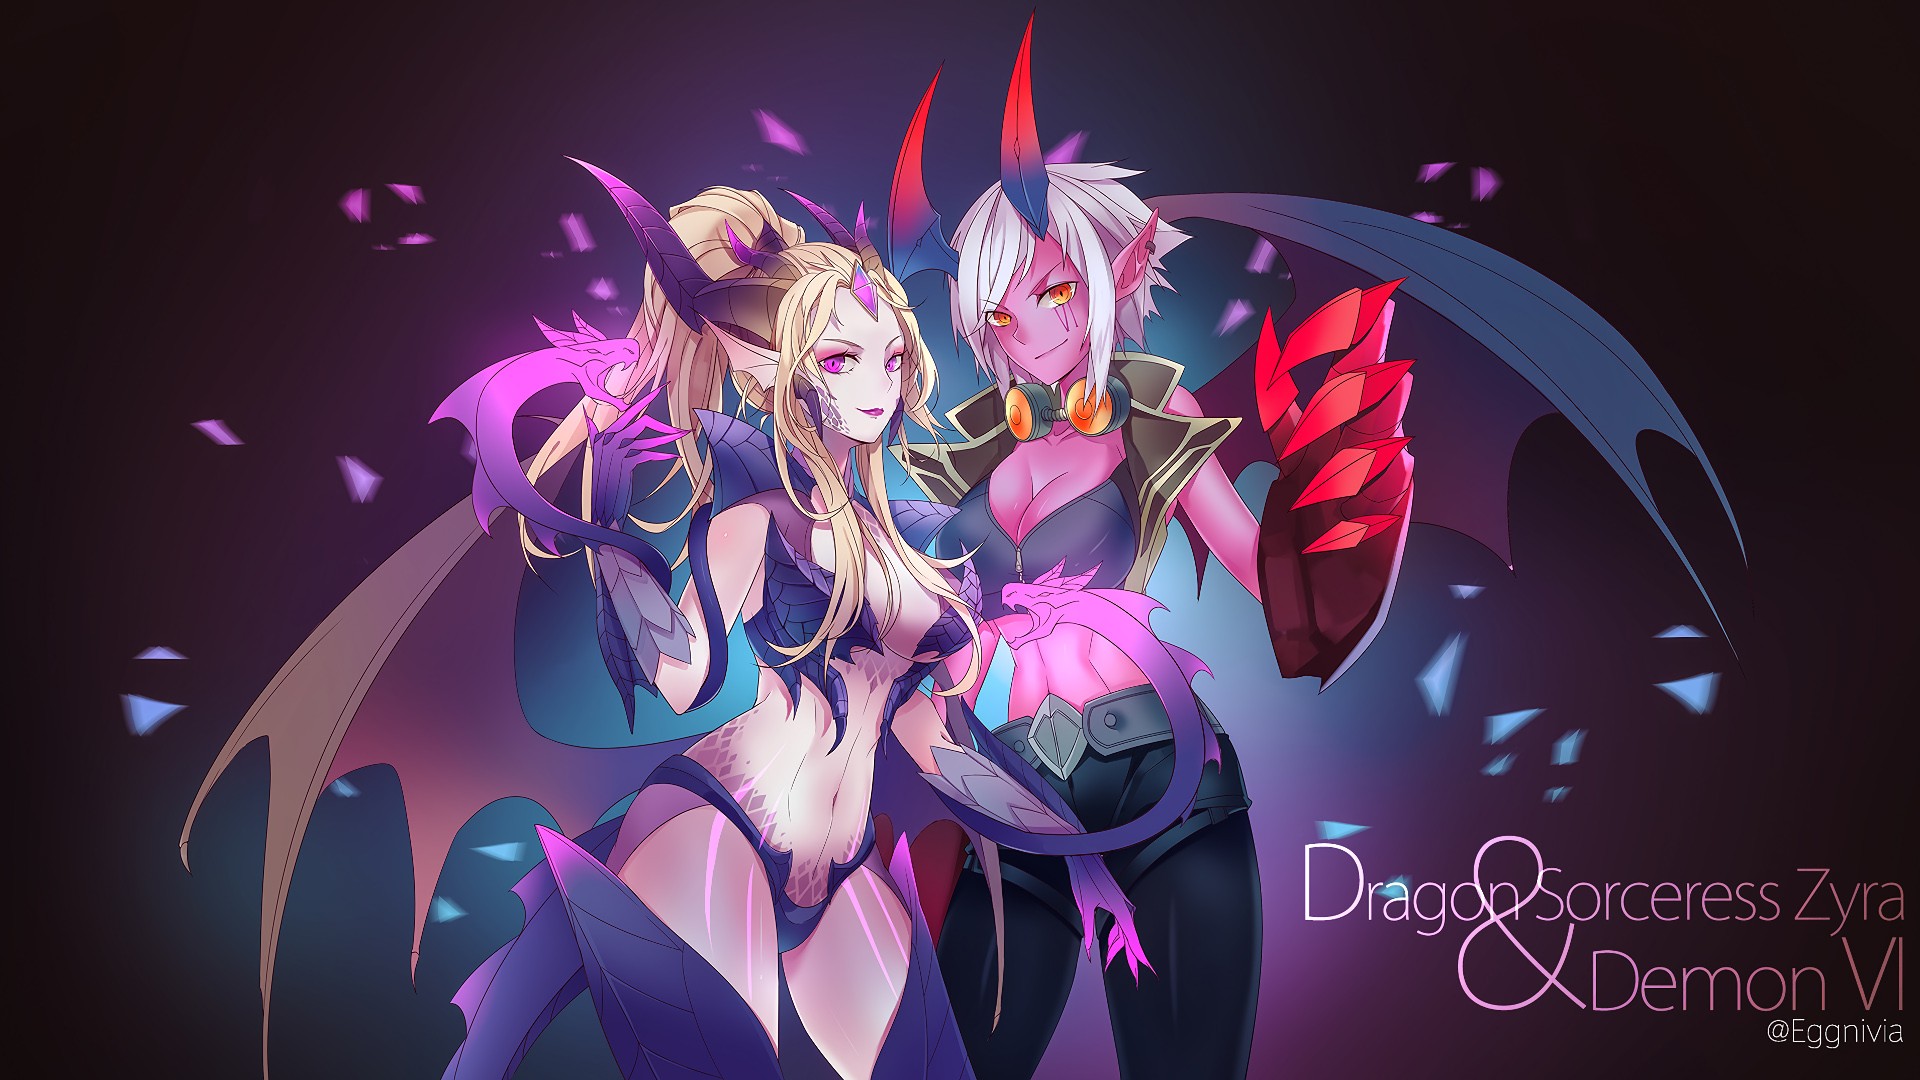 Dragon Sorceress Zyra & Demon Vi By Eggnivia Hd Wallpaper - League Of Legends Dragon Sorceress Zyra - HD Wallpaper 